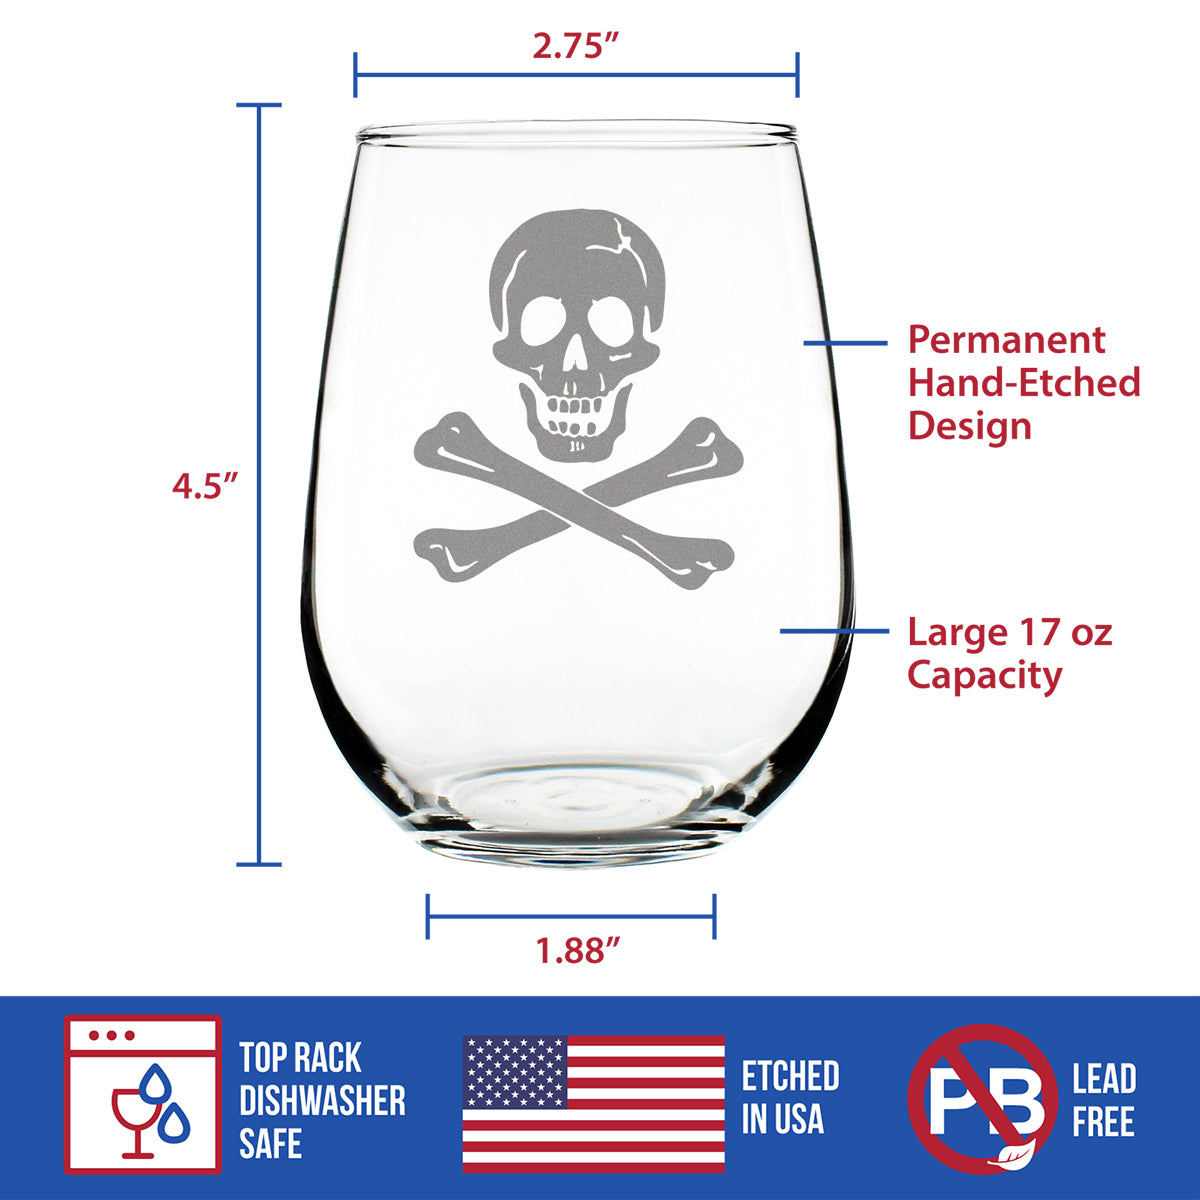 Skull and Crossbones Stemless Wine Glass - Skull Decor and Jolly Roger Flag Gifts - Large 17 Oz Glasses